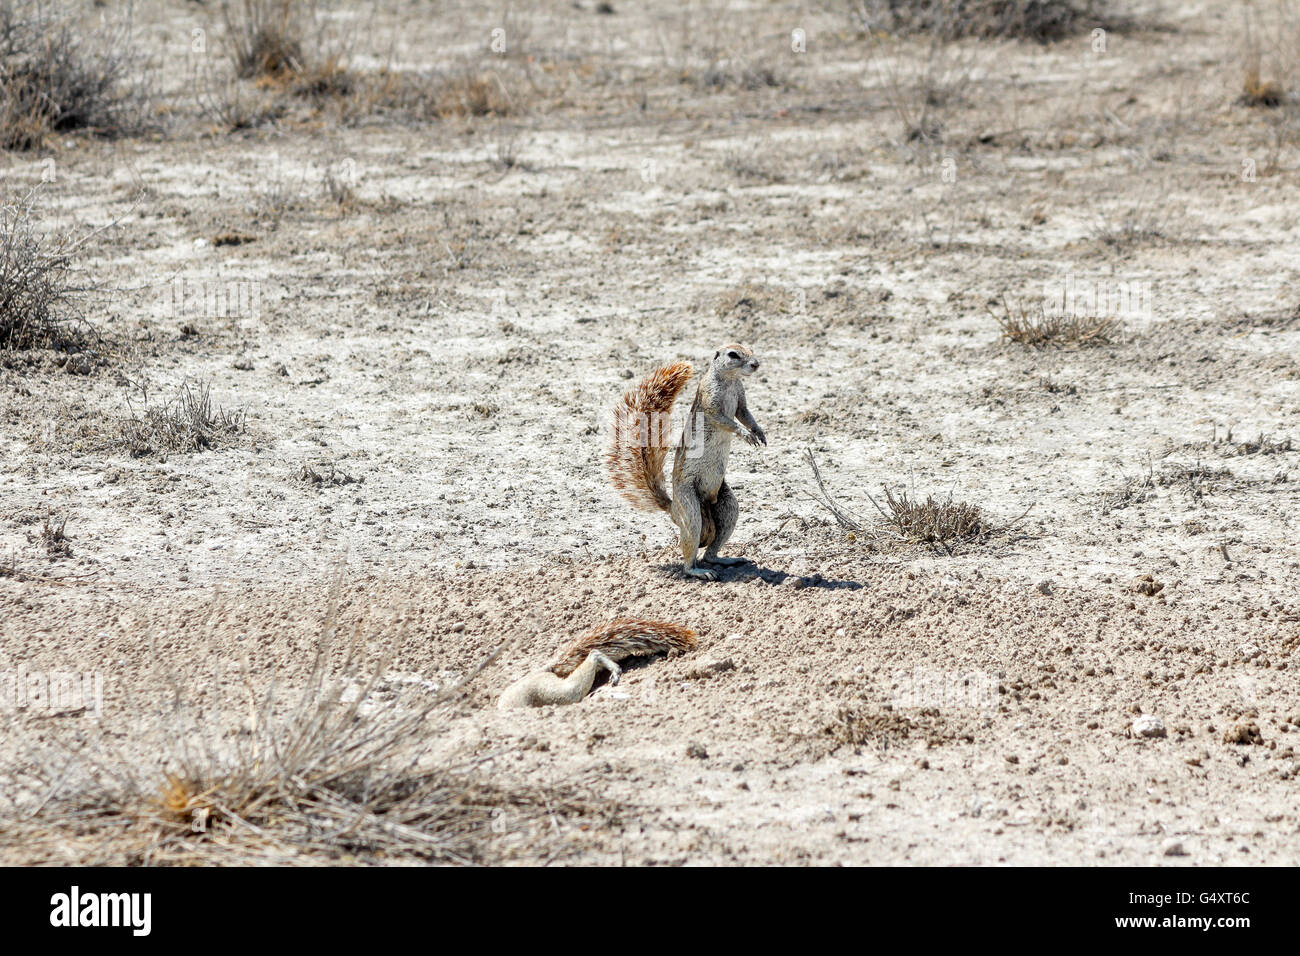 La Namibie, Oshikoto, Okaukuejo, Etosha National Park, South African ground squirrel Banque D'Images